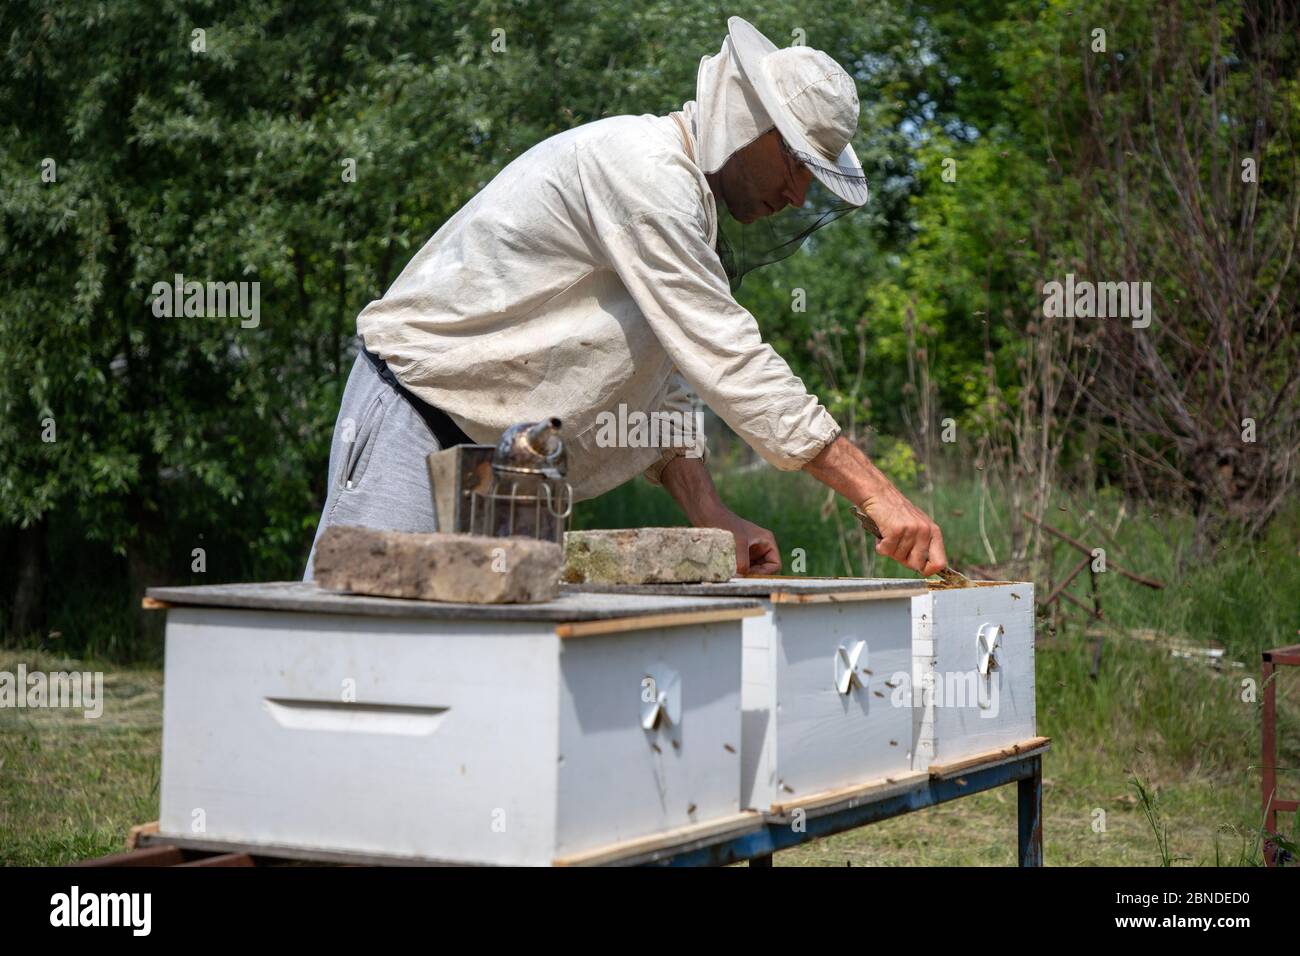 Belgrade, Serbia, May 10, 2020: Beekeeper working on a hive Stock Photo